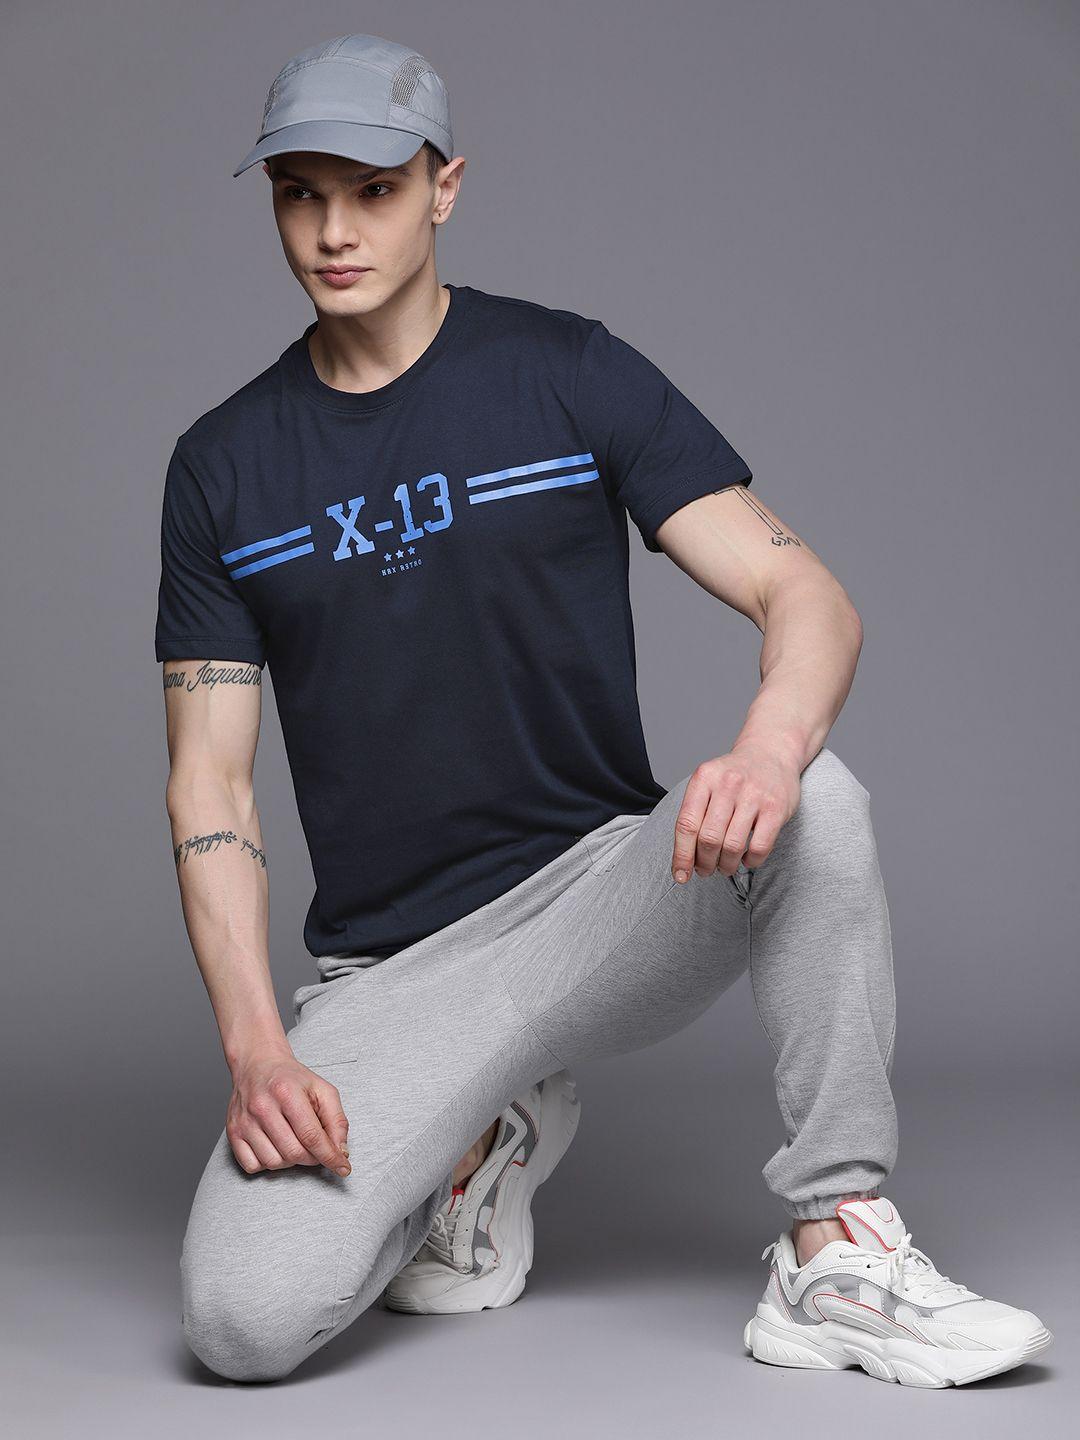 hrx by hrithik roshan short sleeves printed casual t-shirt